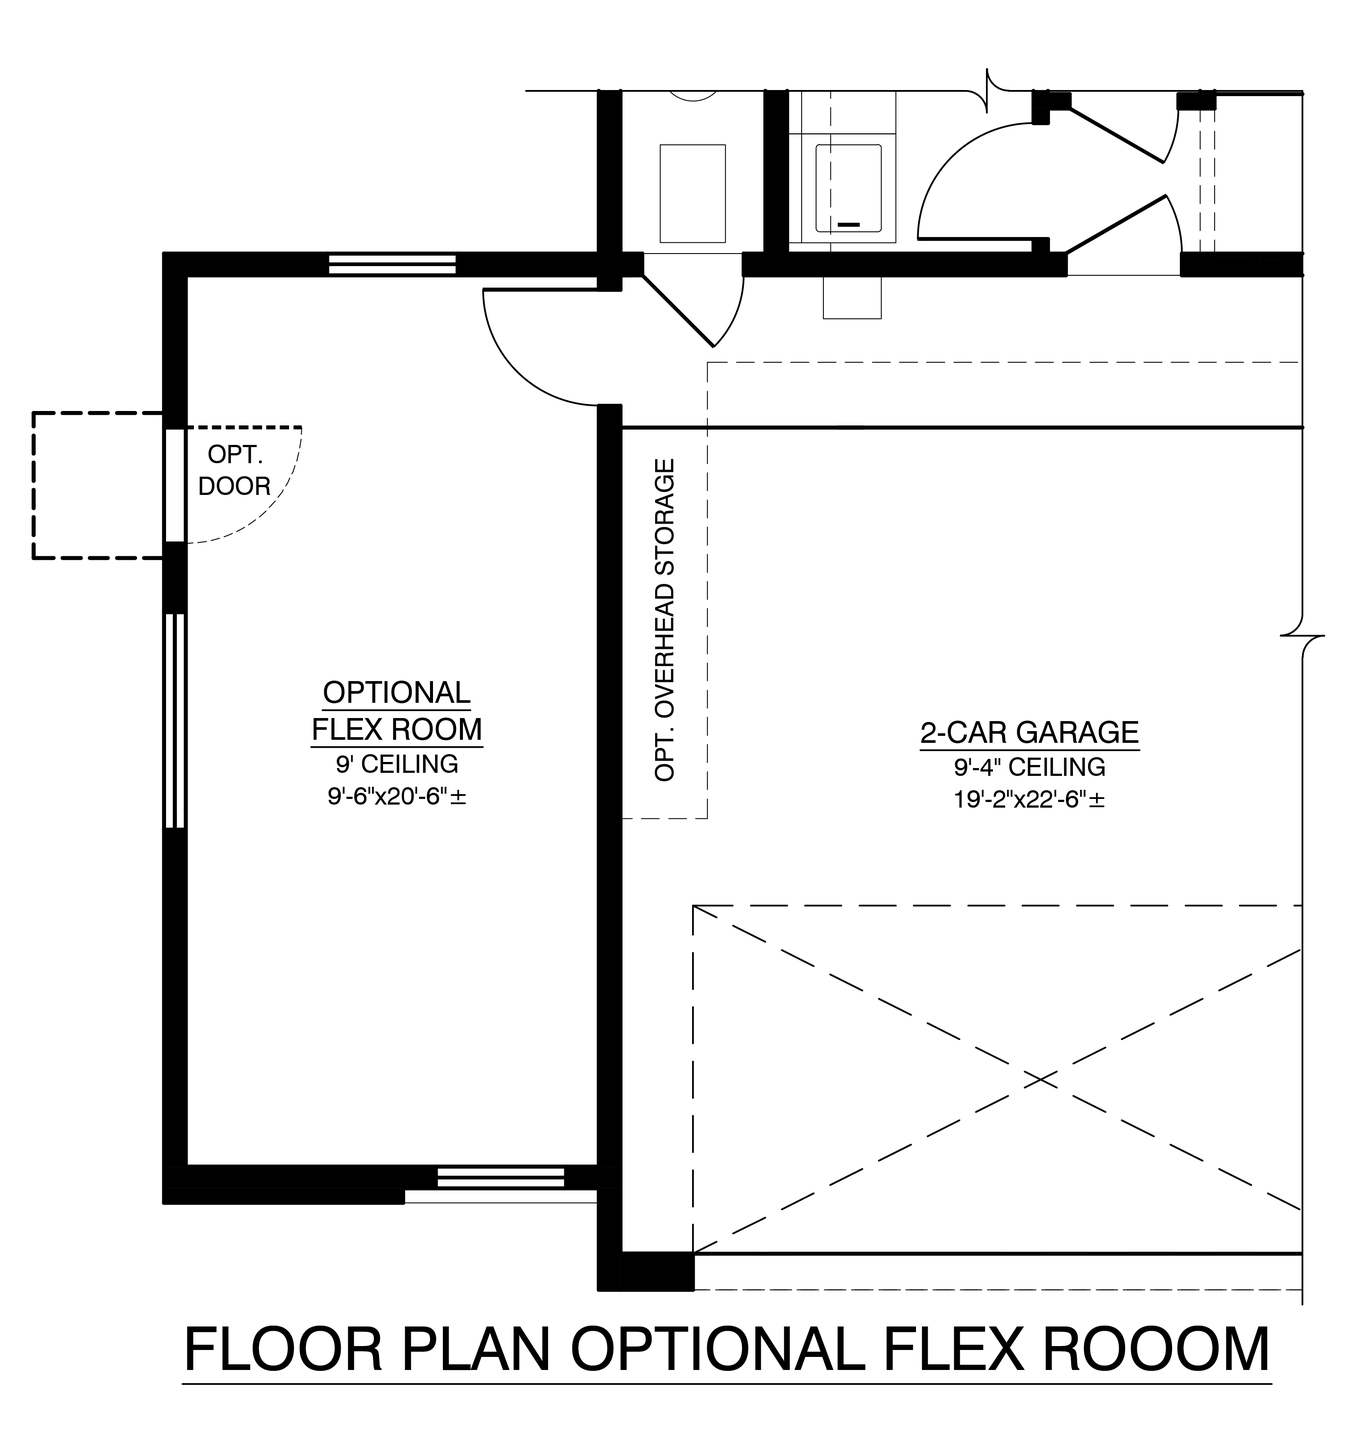 Optional Flex Room